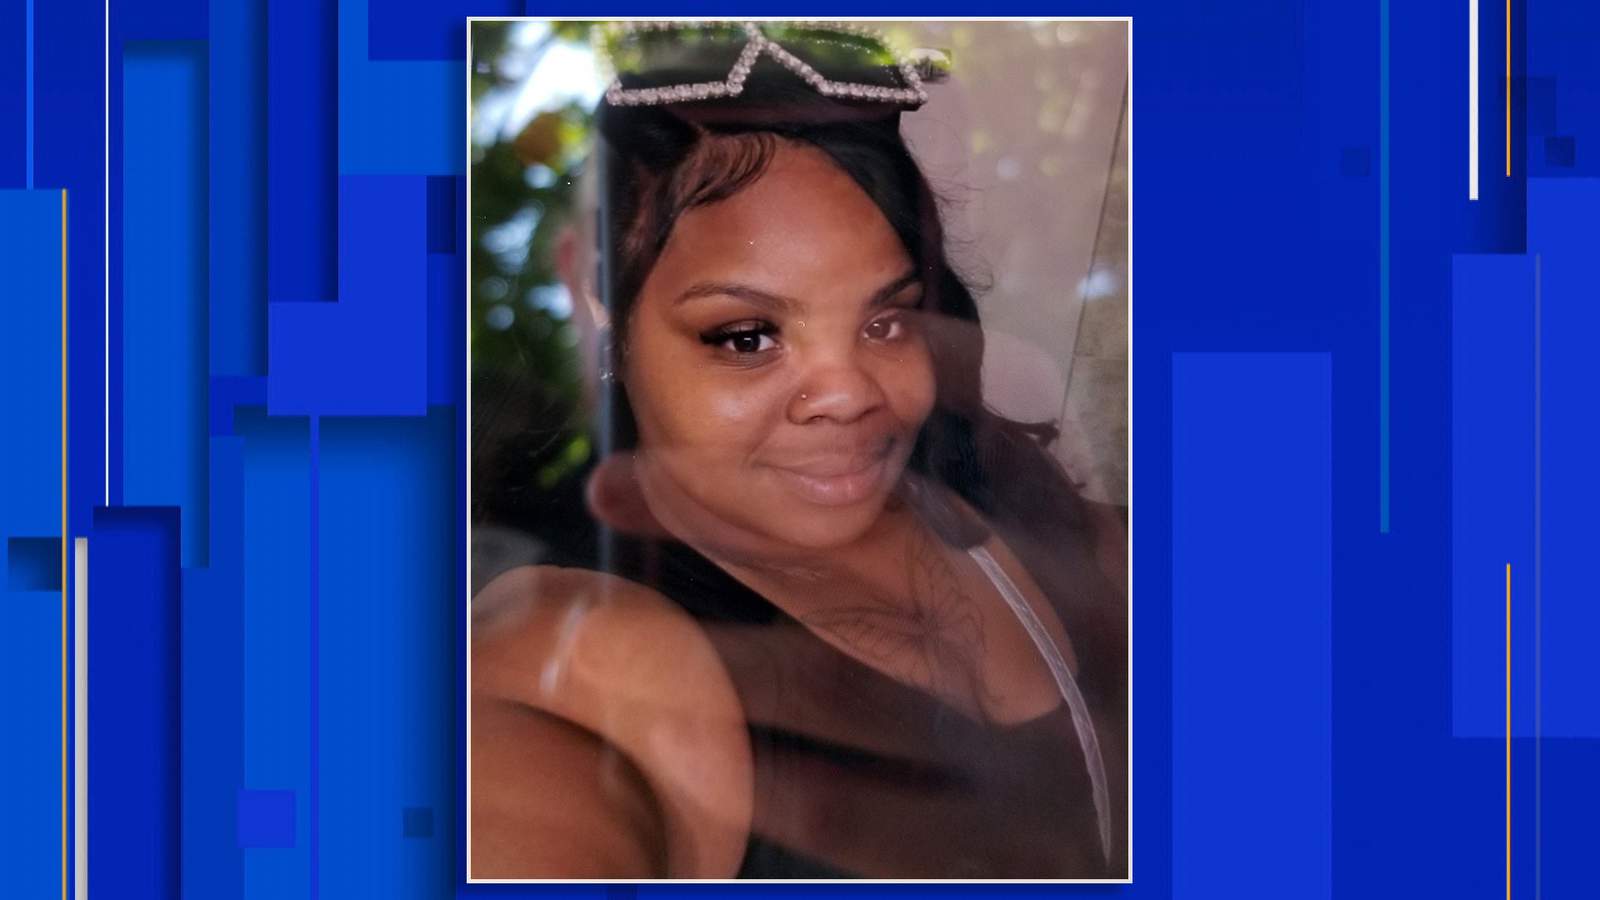 Detroit police seek missing 27-year-old woman last seen Friday